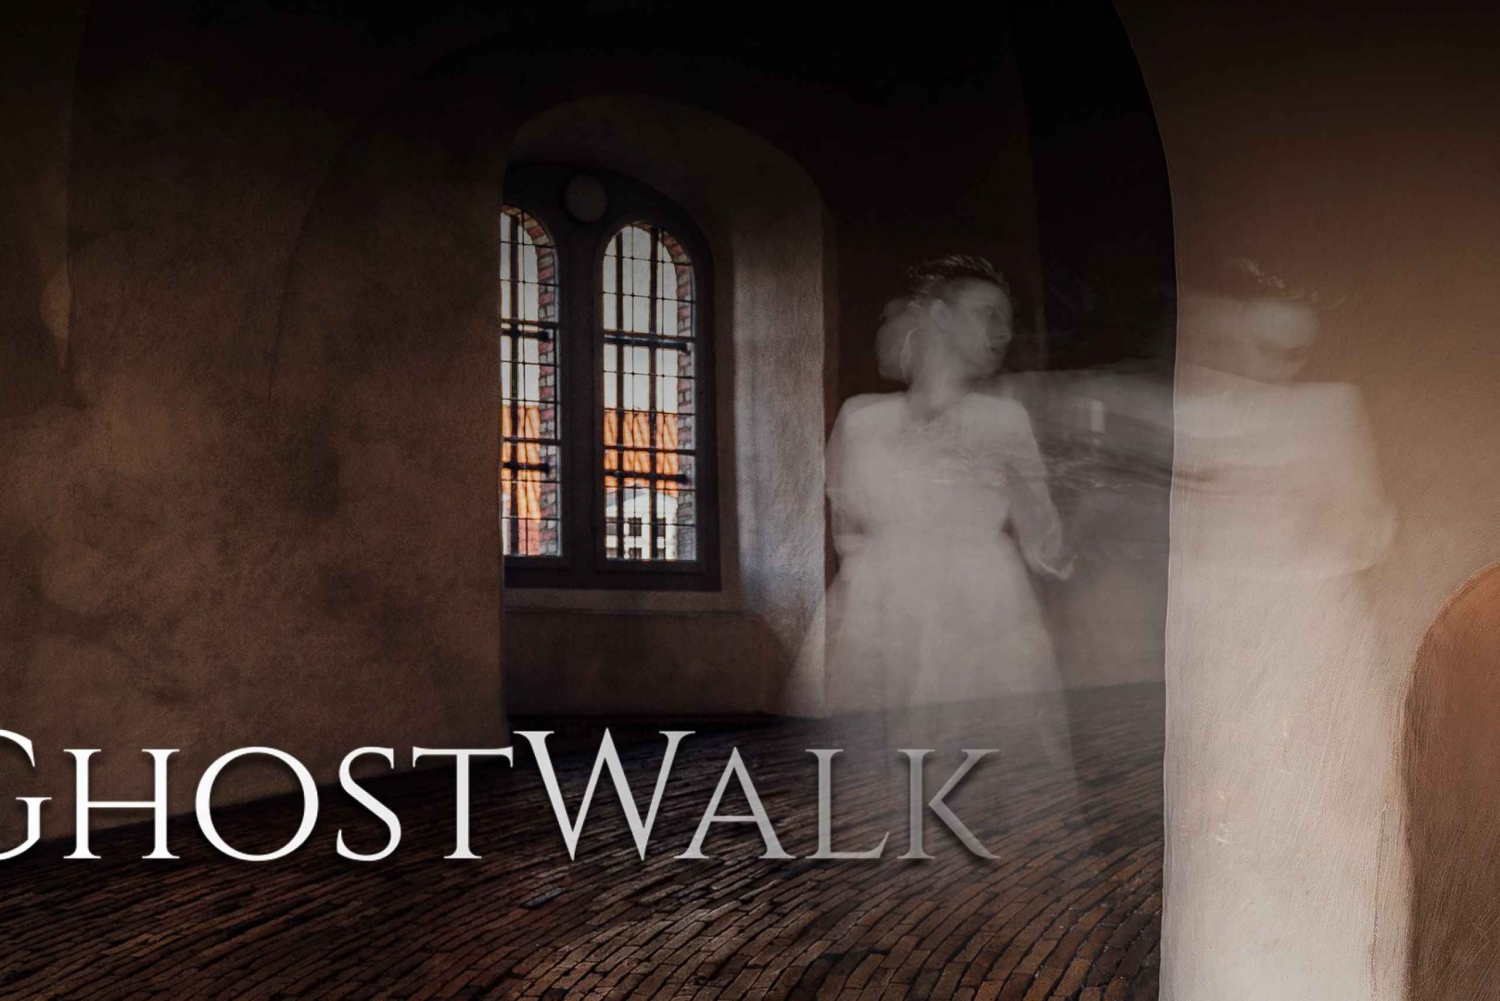 Ghostwalk: A Self-Guided Walking Tour